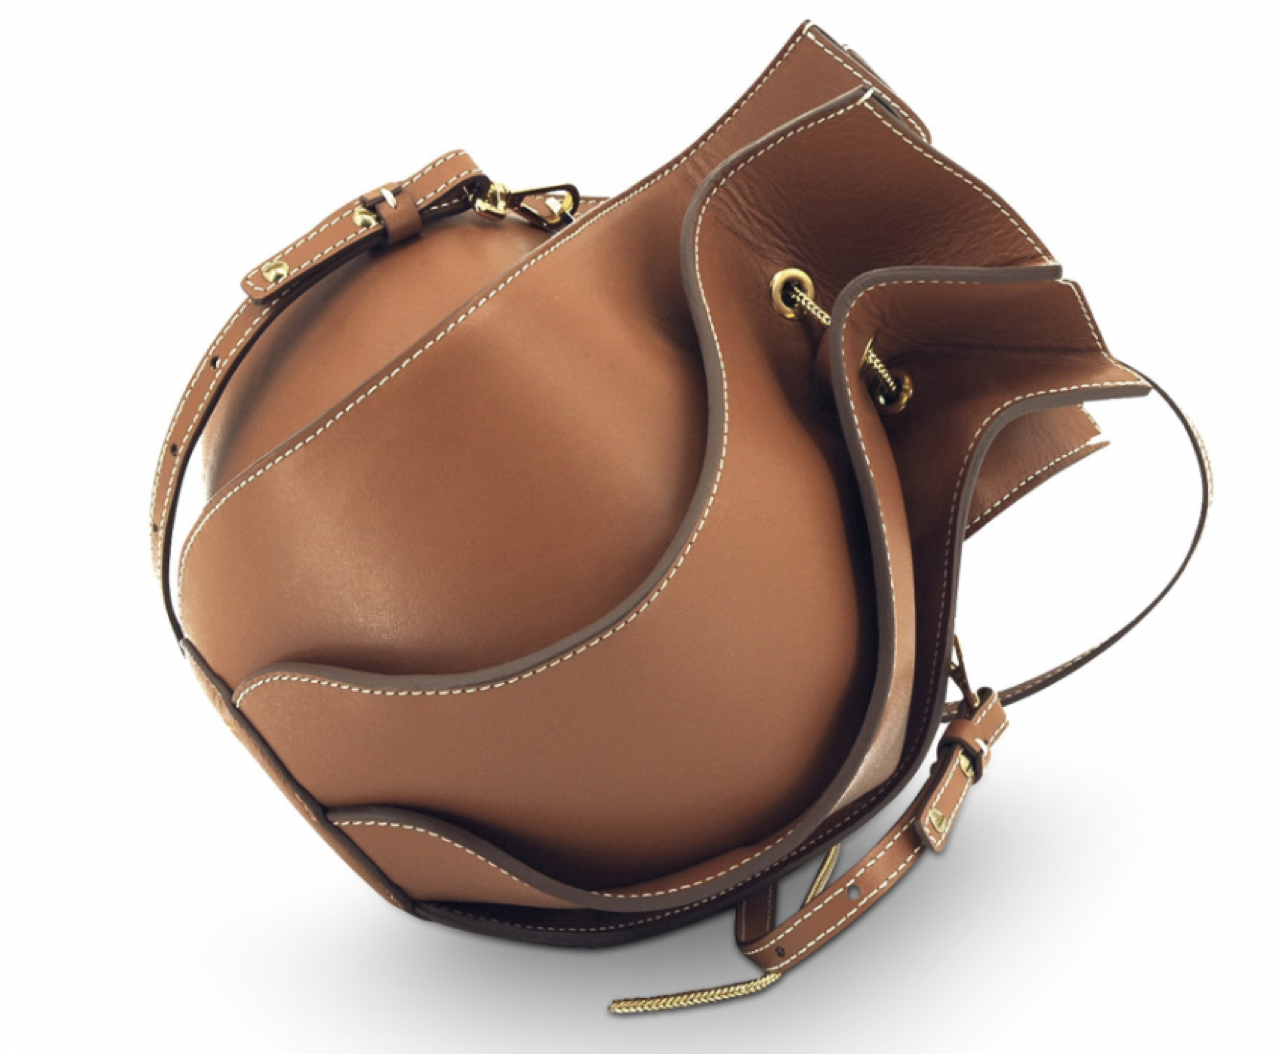 Most Iconic Handbags